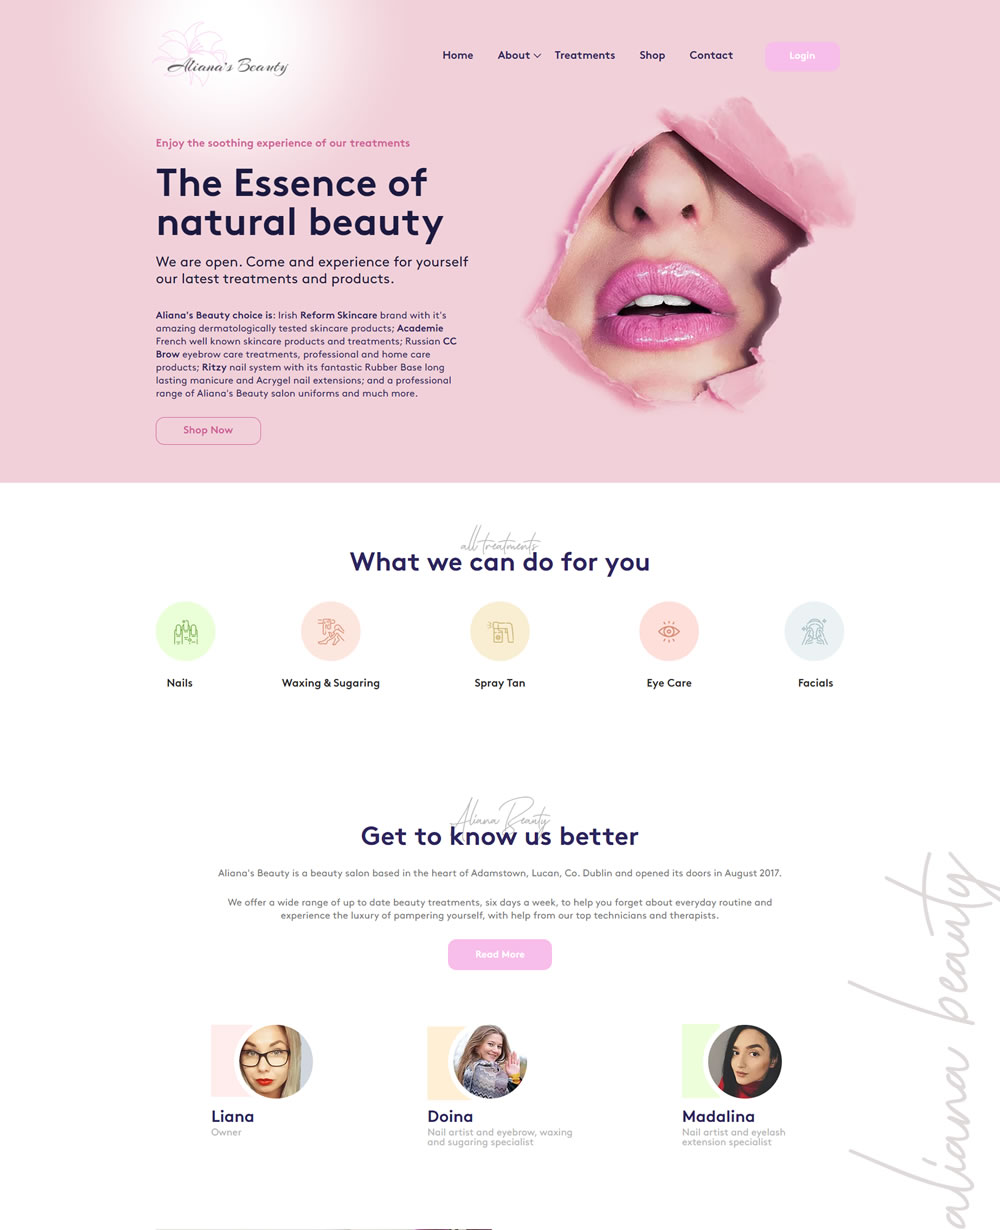 Alianas Beauty - new website design and website management